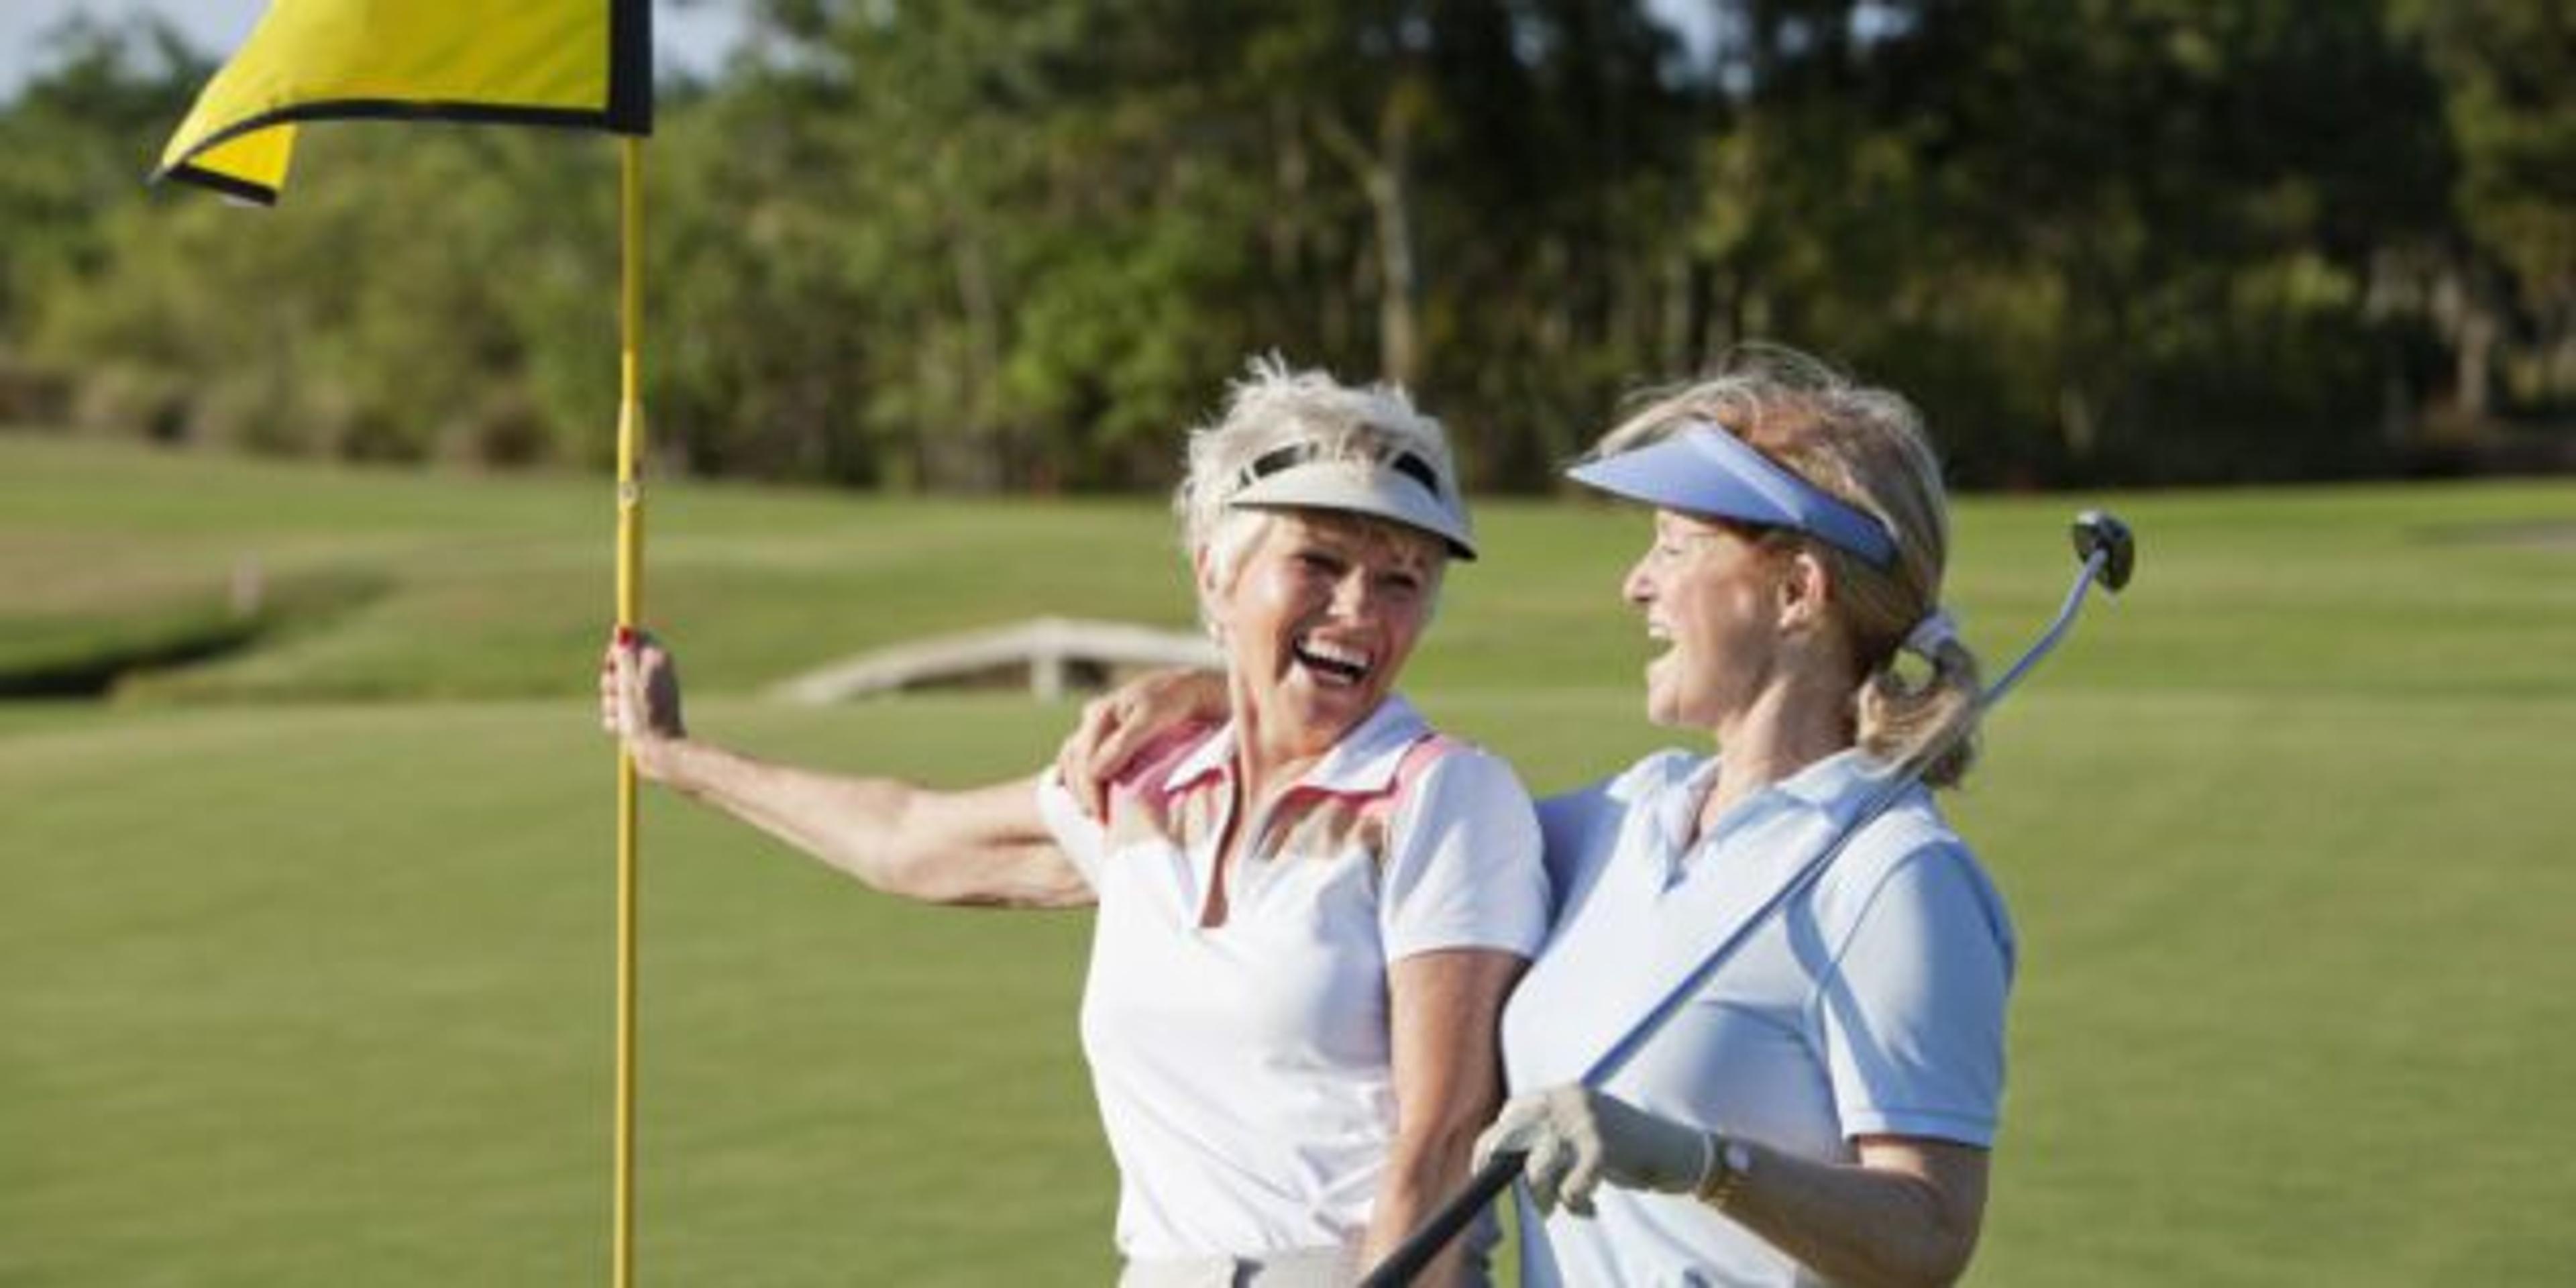 Senior women enjoying the health benefits of golf.